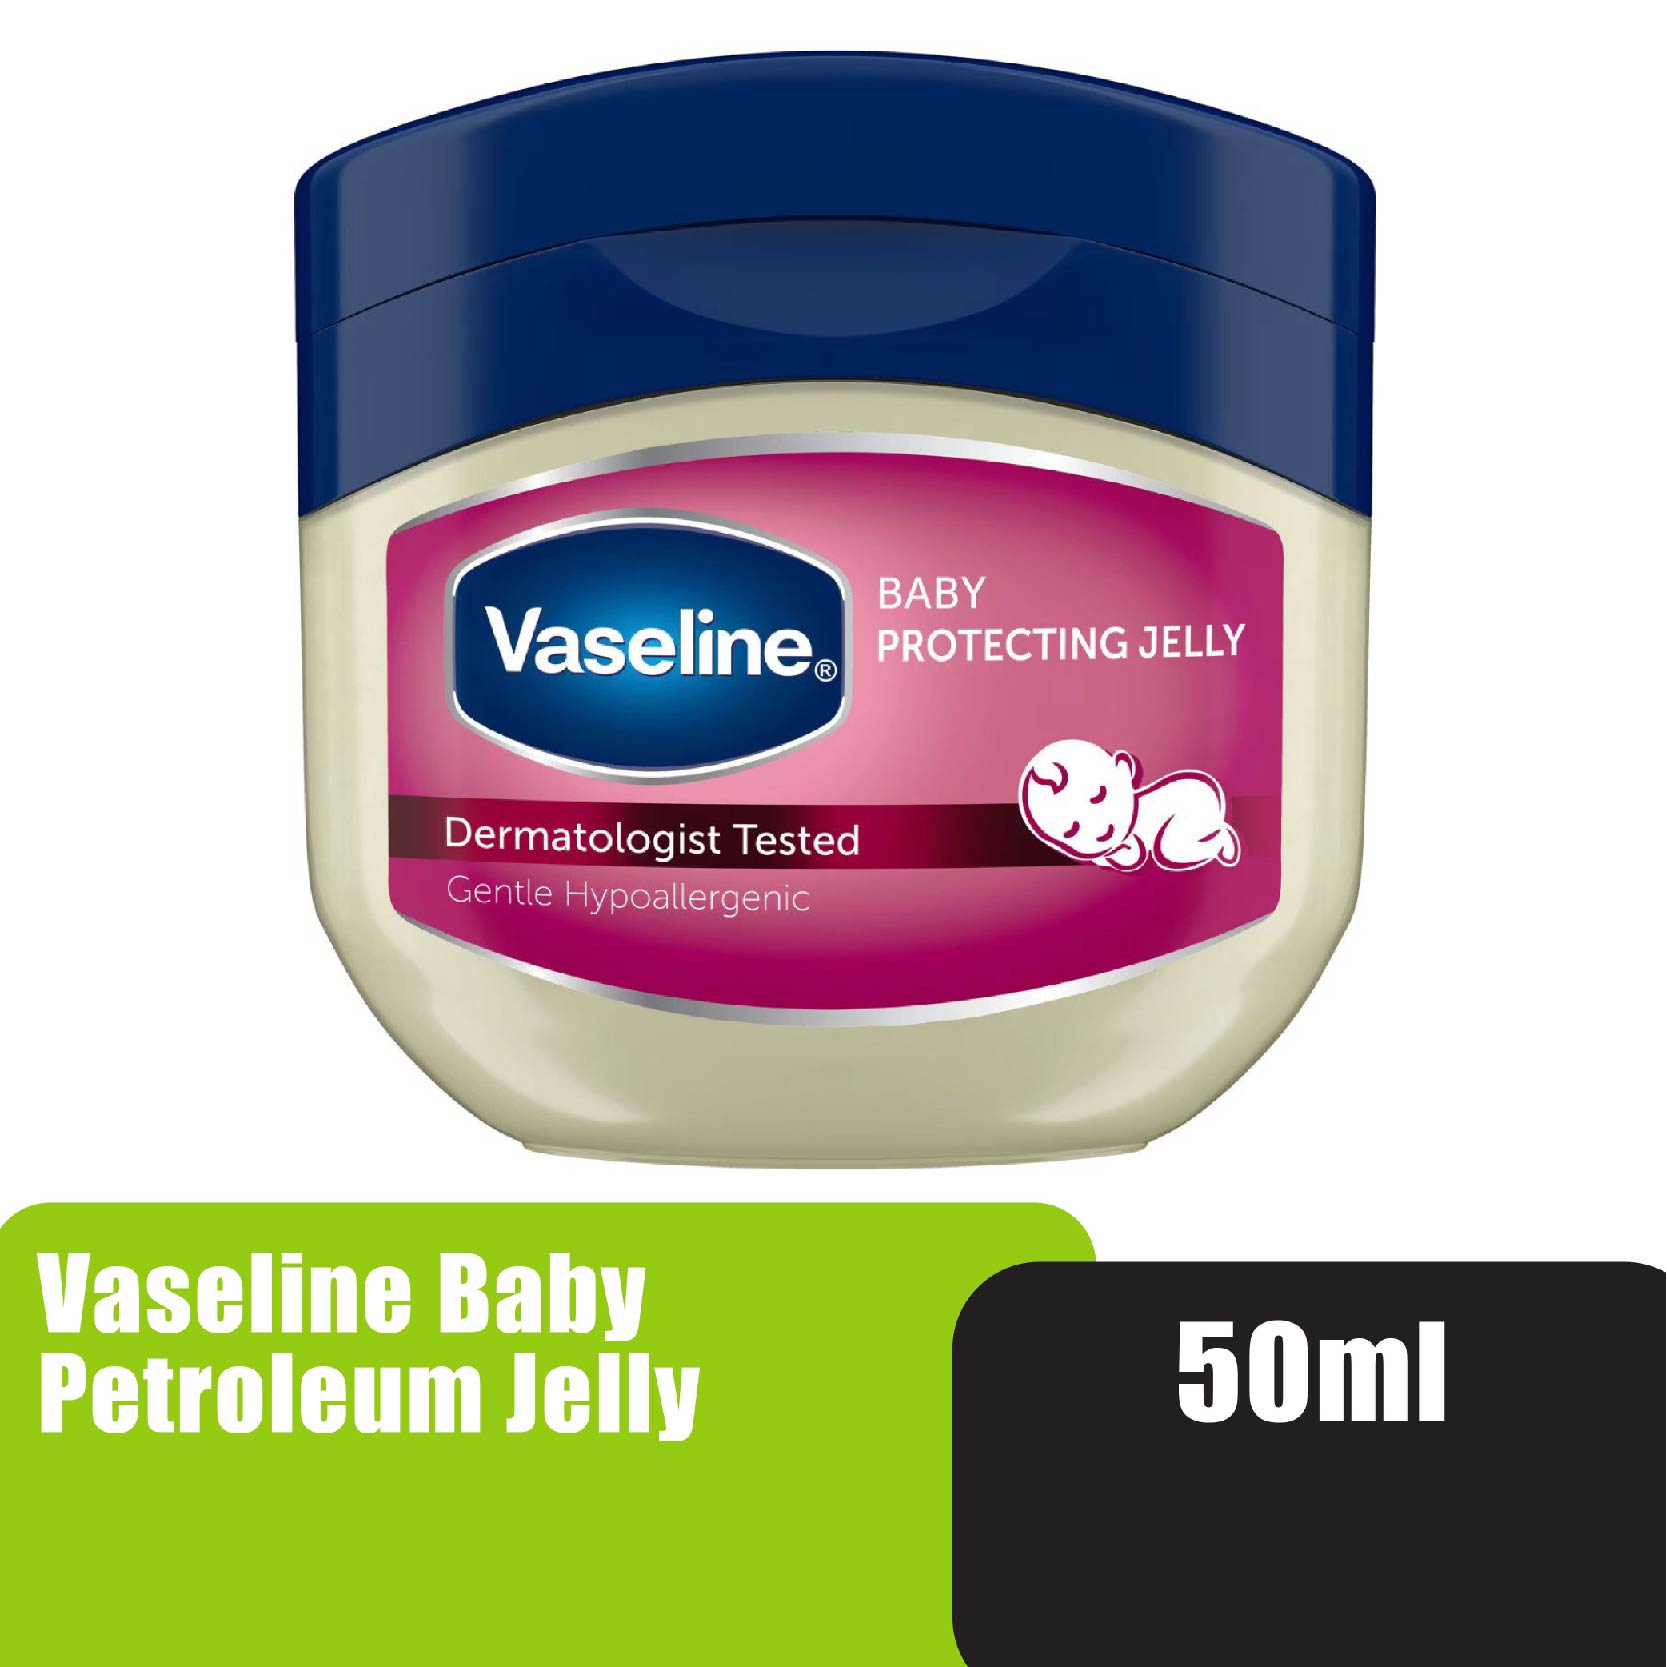 Vaseline Baby Protecting Jelly 50ml